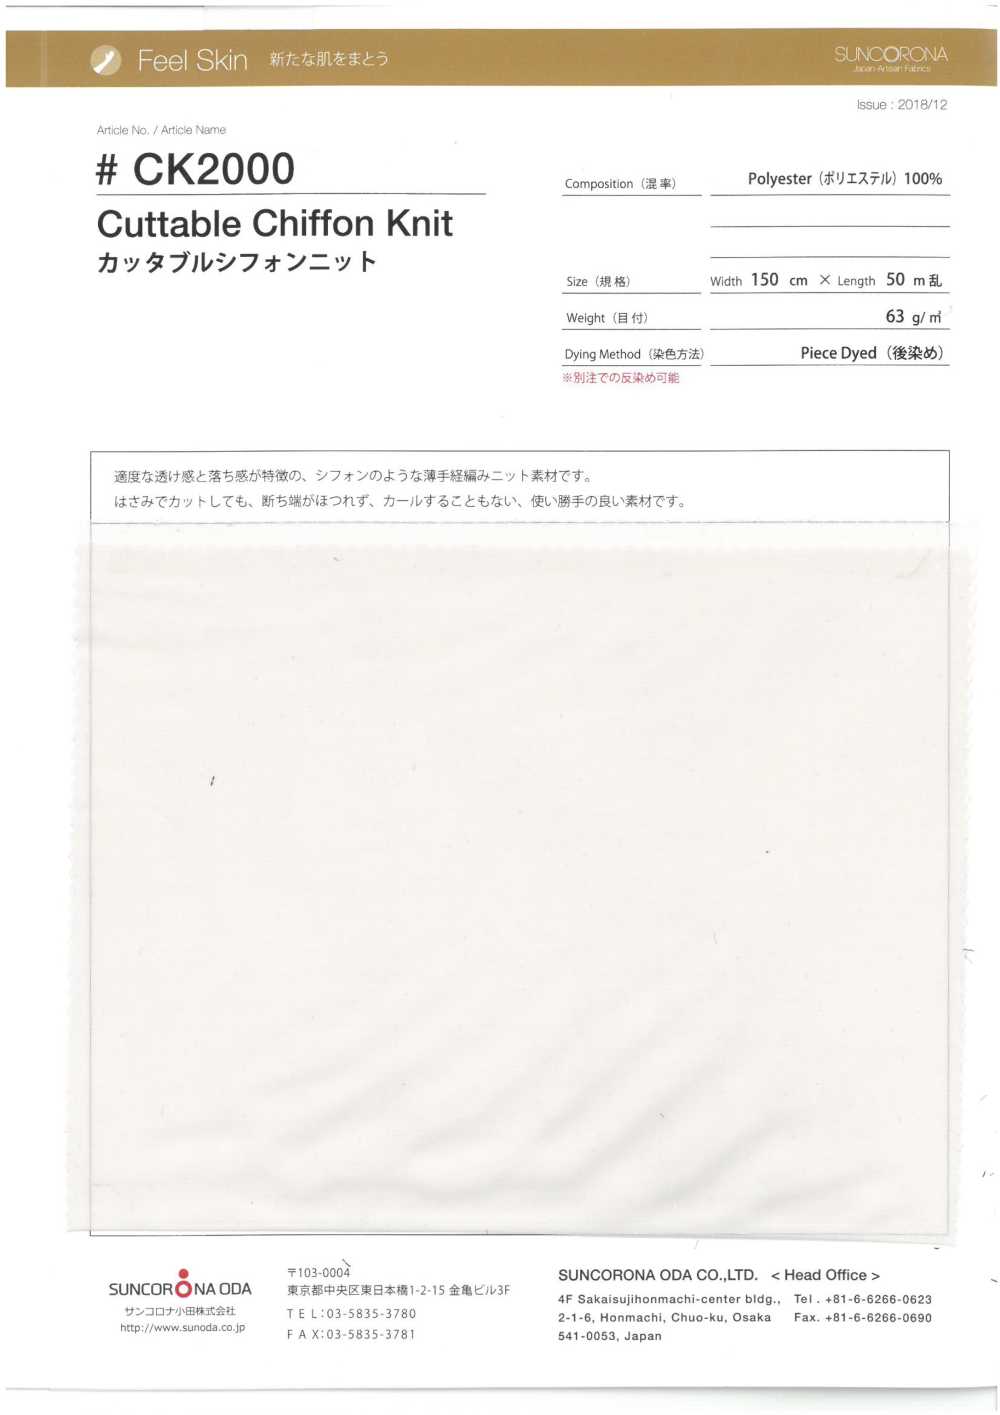 CK2000 Tejido De Gasa Recortable[Fabrica Textil] Suncorona Oda